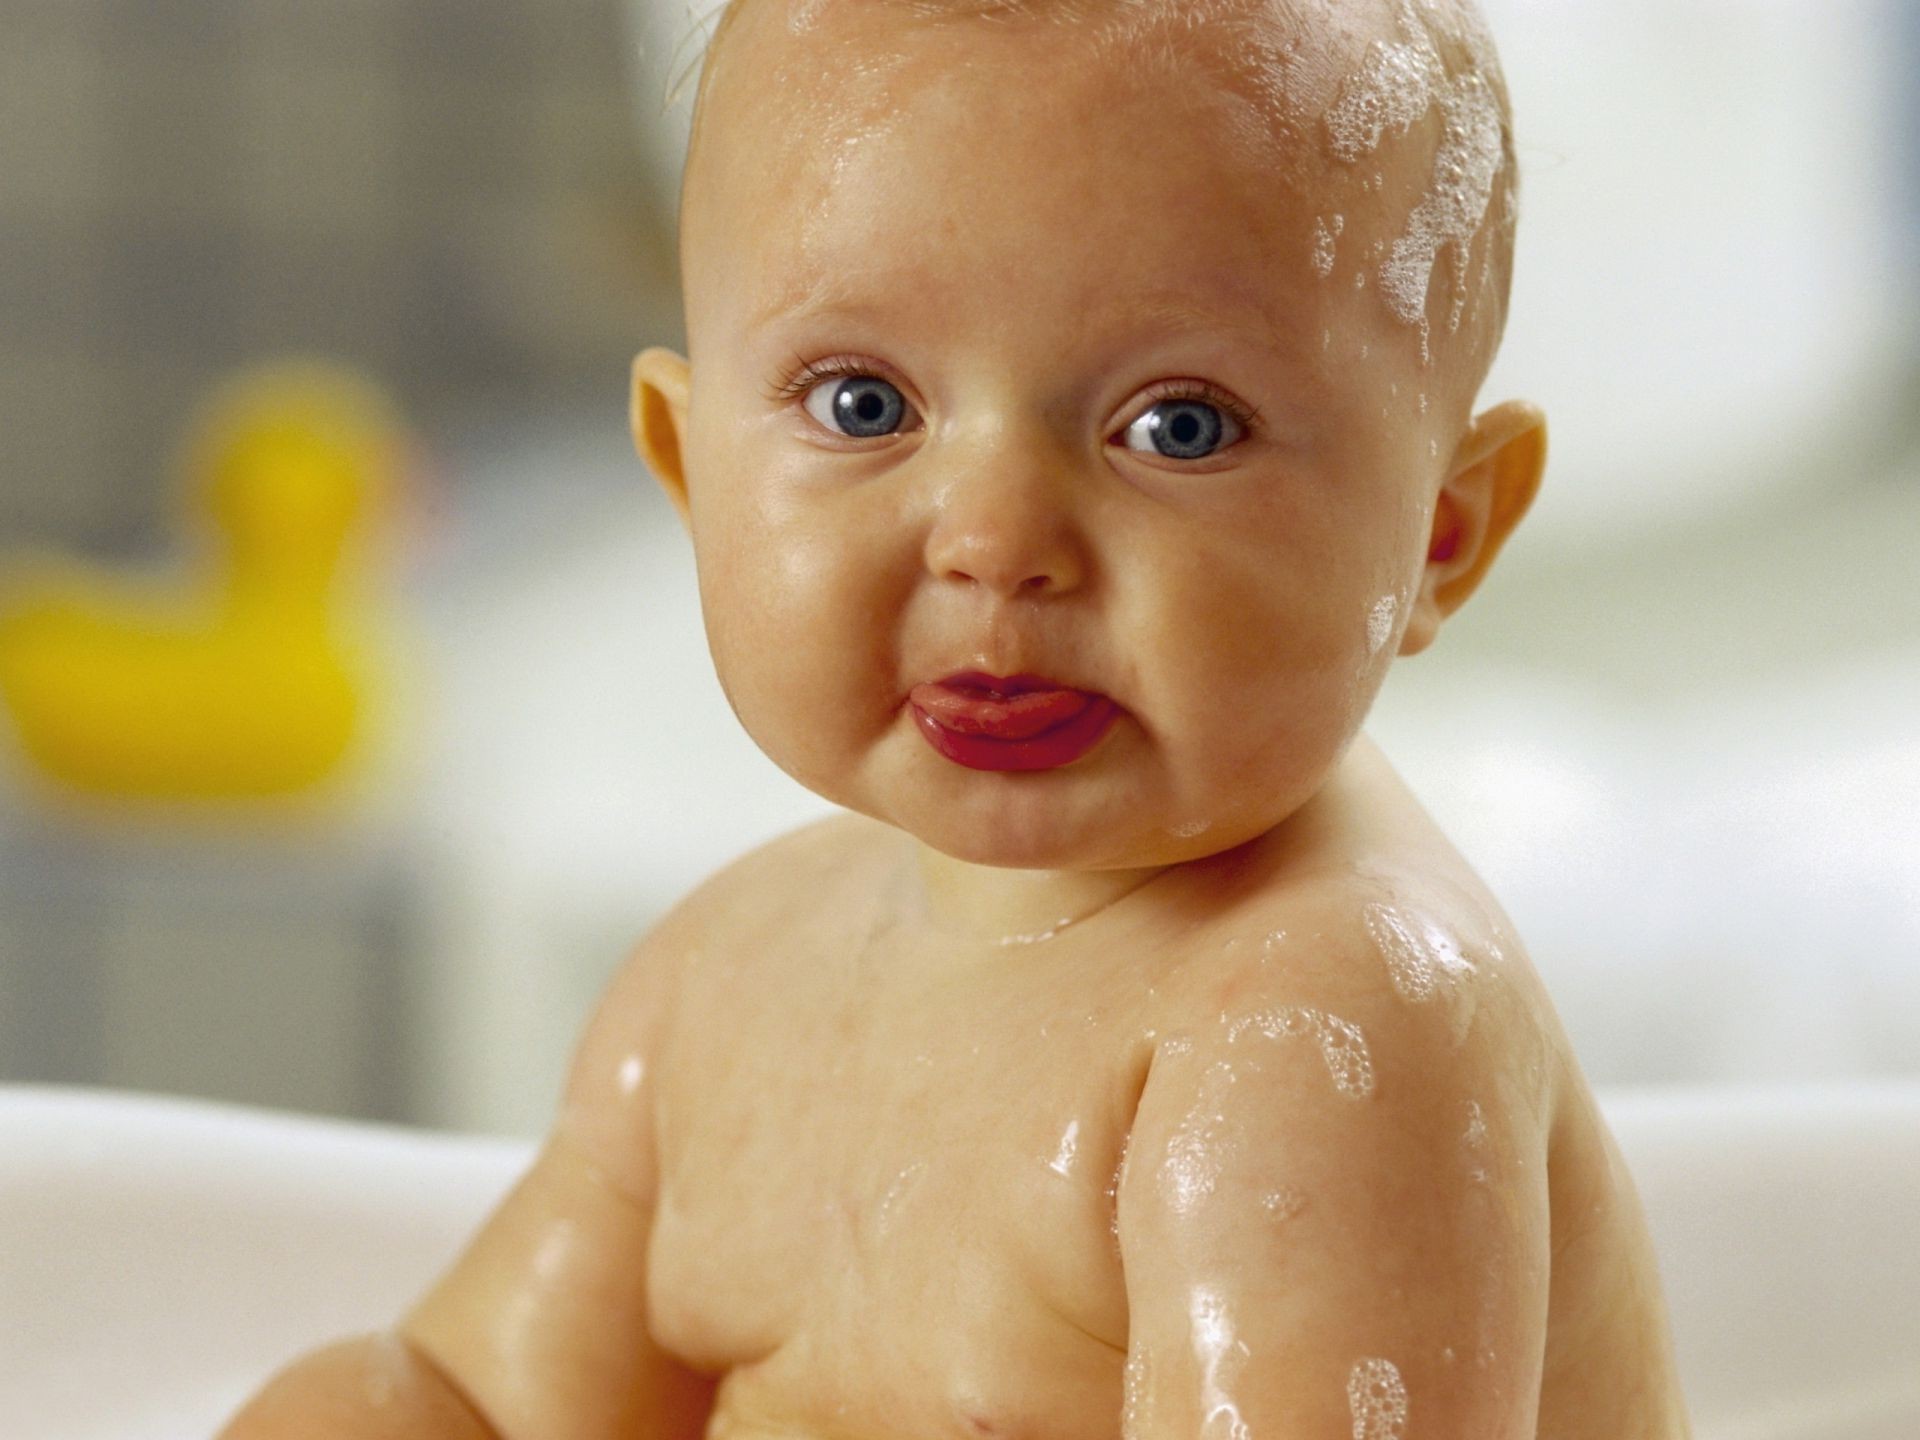 babies child baby boy little indoors innocence bathroom bathtub cute toddler bath soap nude fun